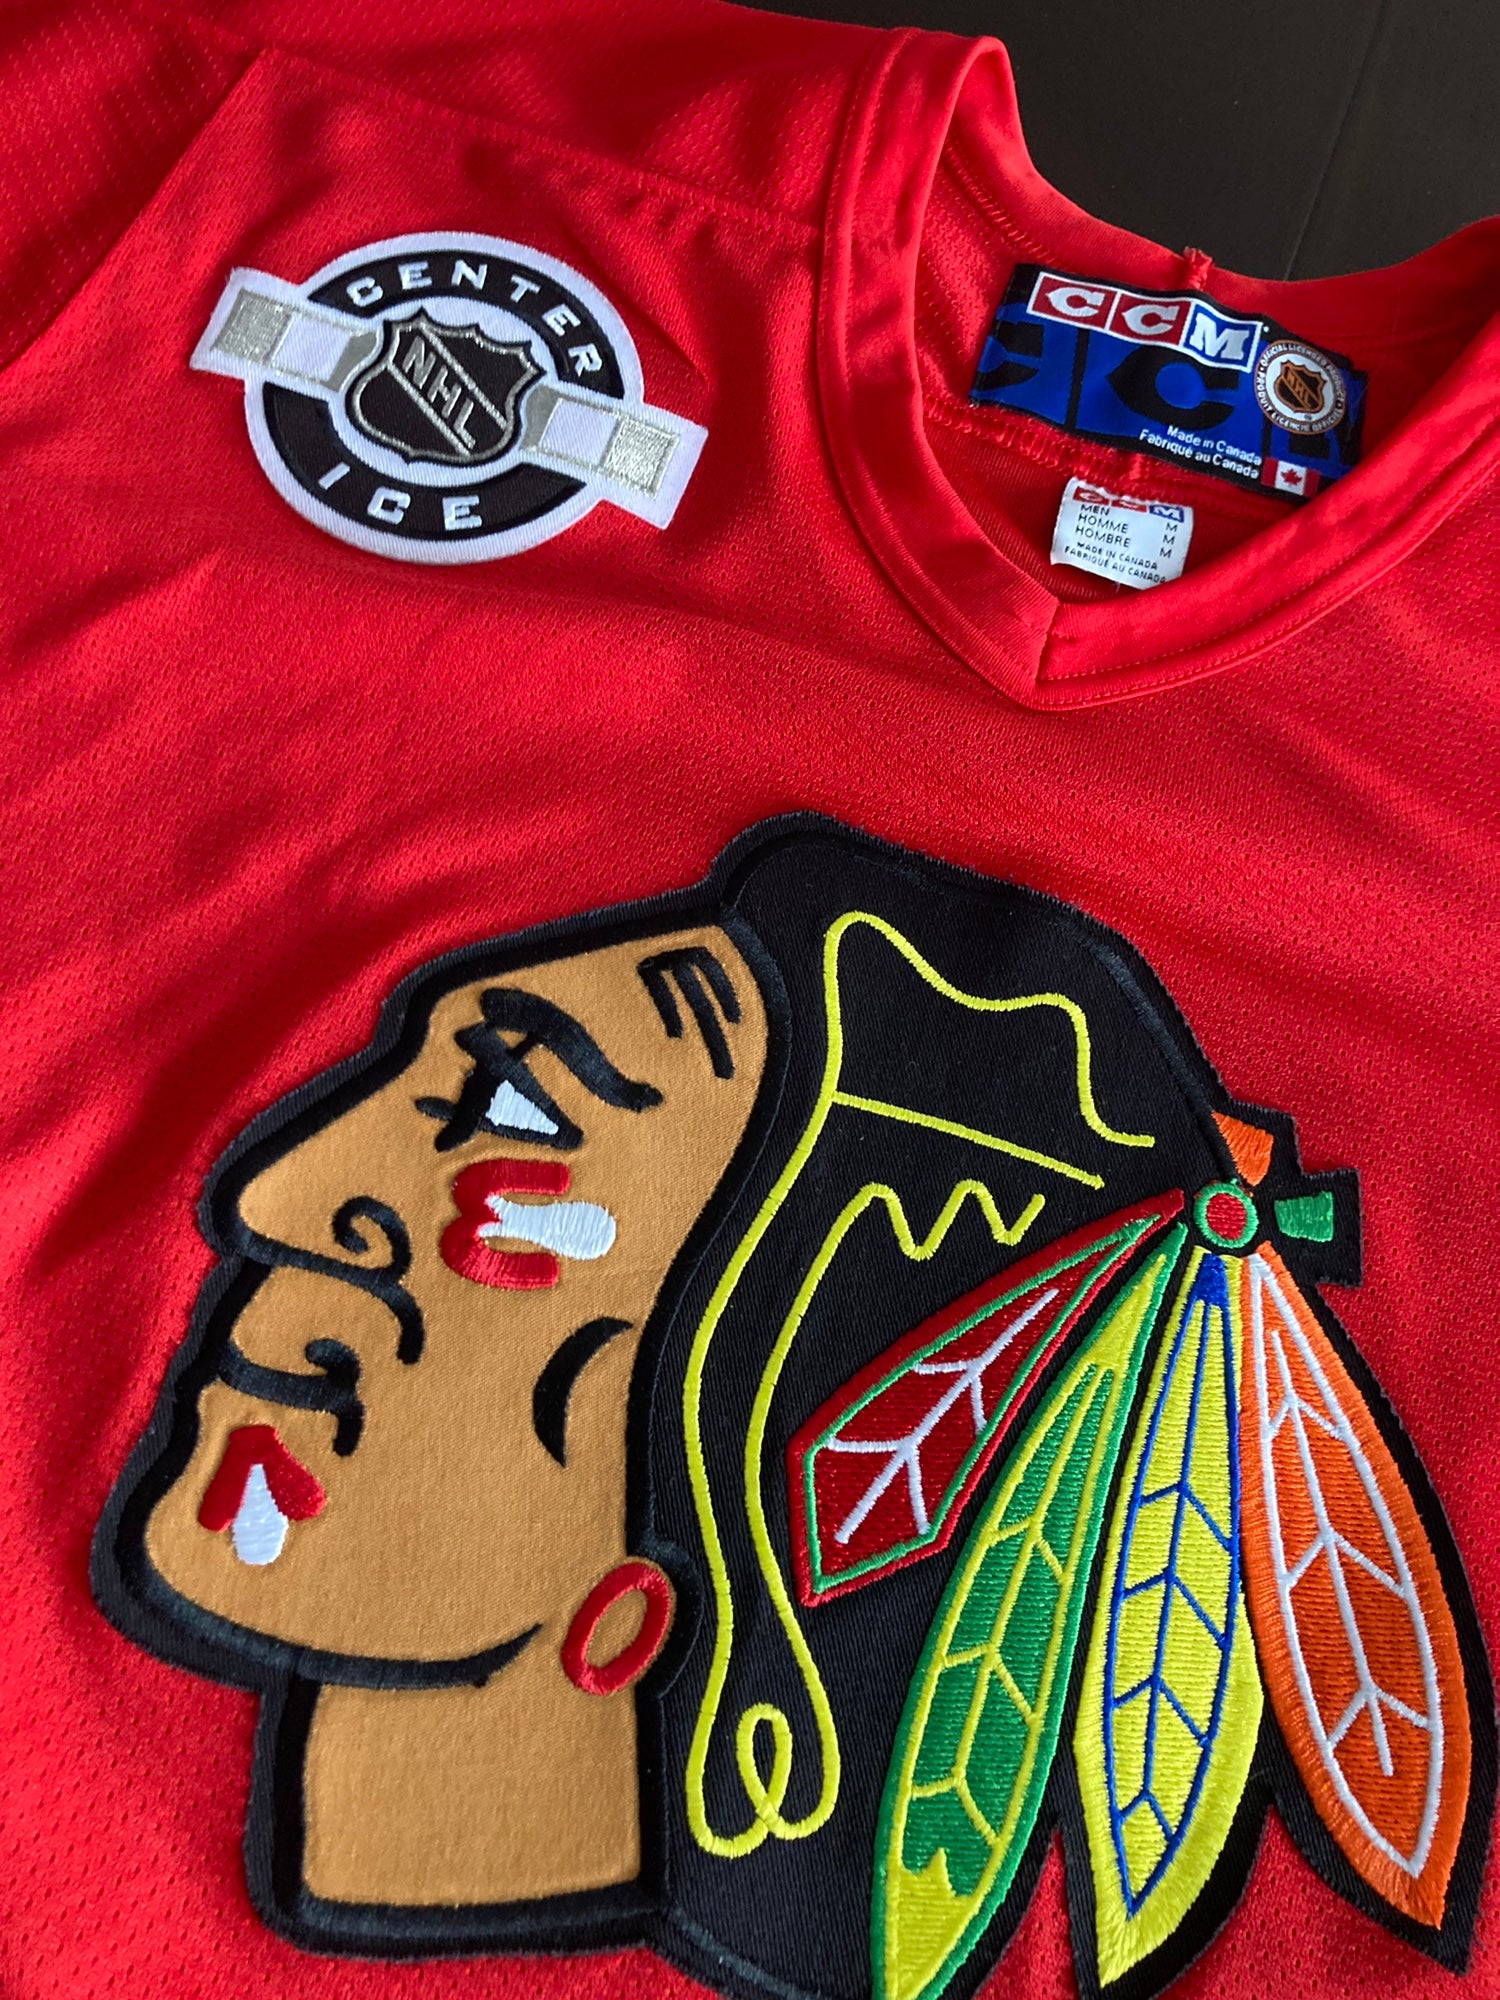 Chicago Blackhawks Reebok NHL Primary Logo Men T Shirt Red